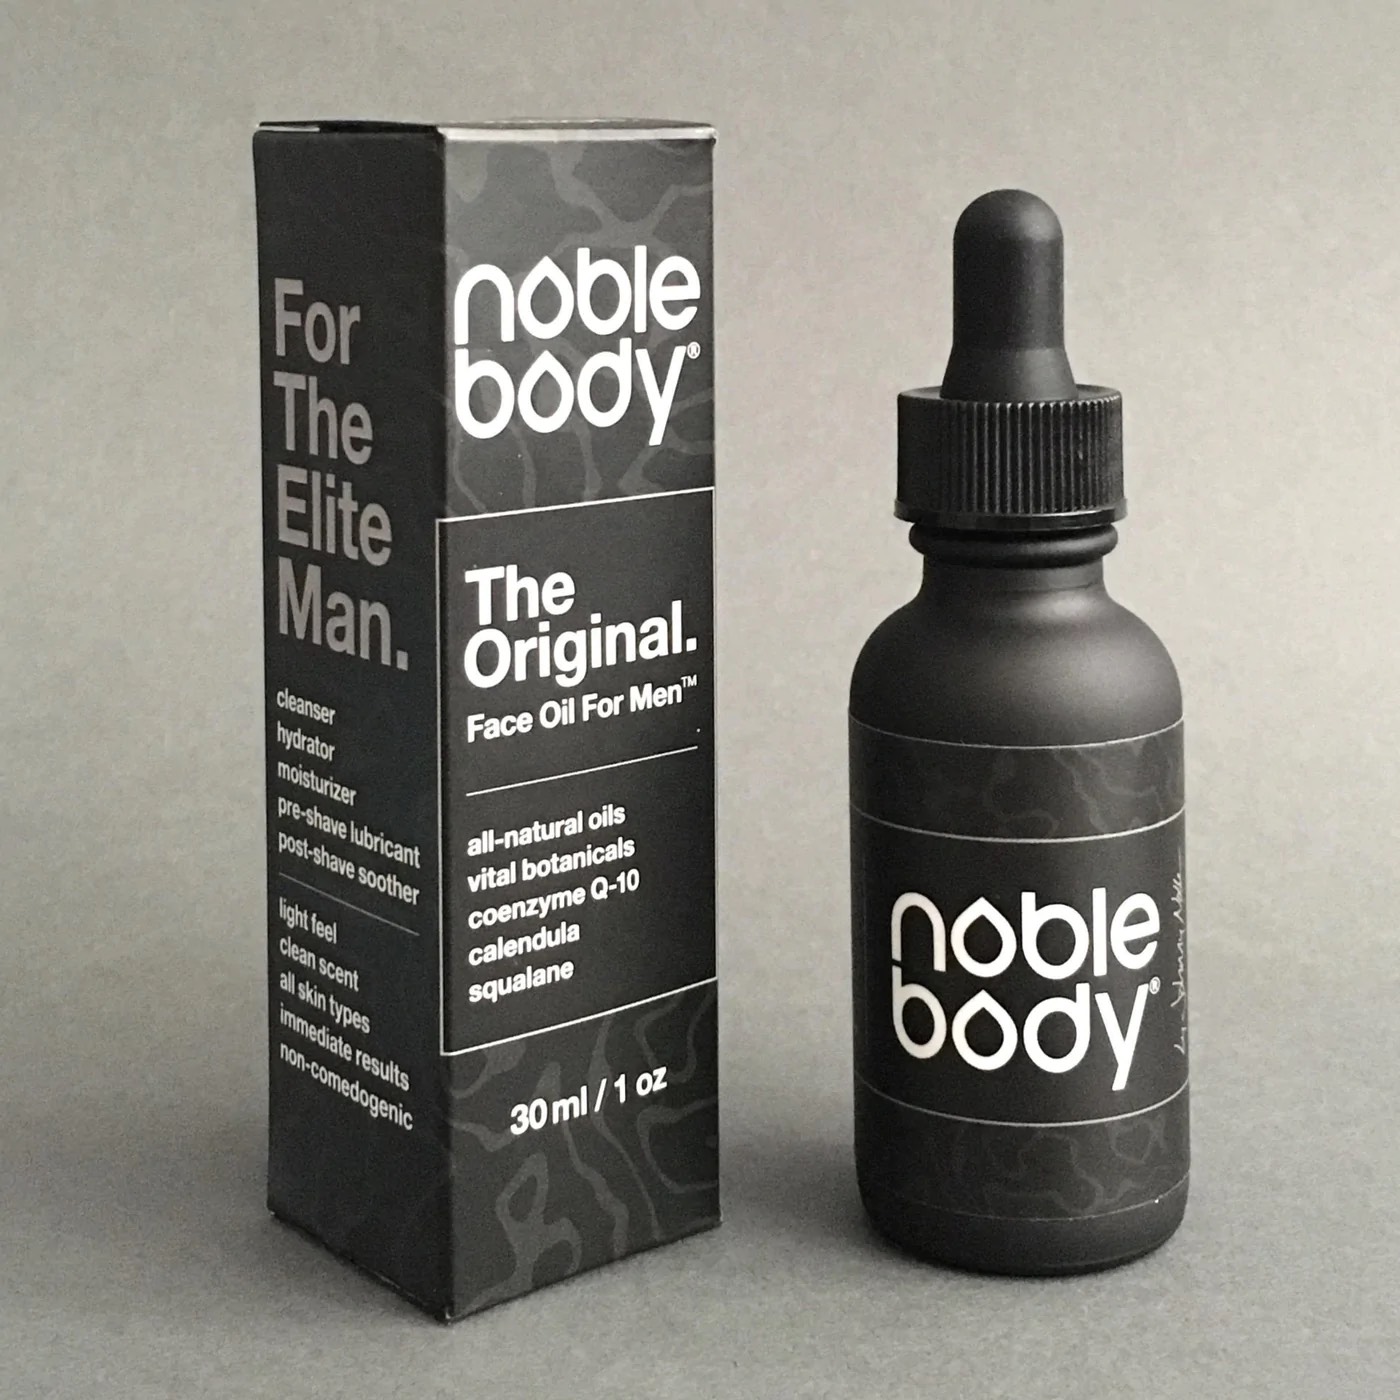 bottle and box of Noble Body face oil for men